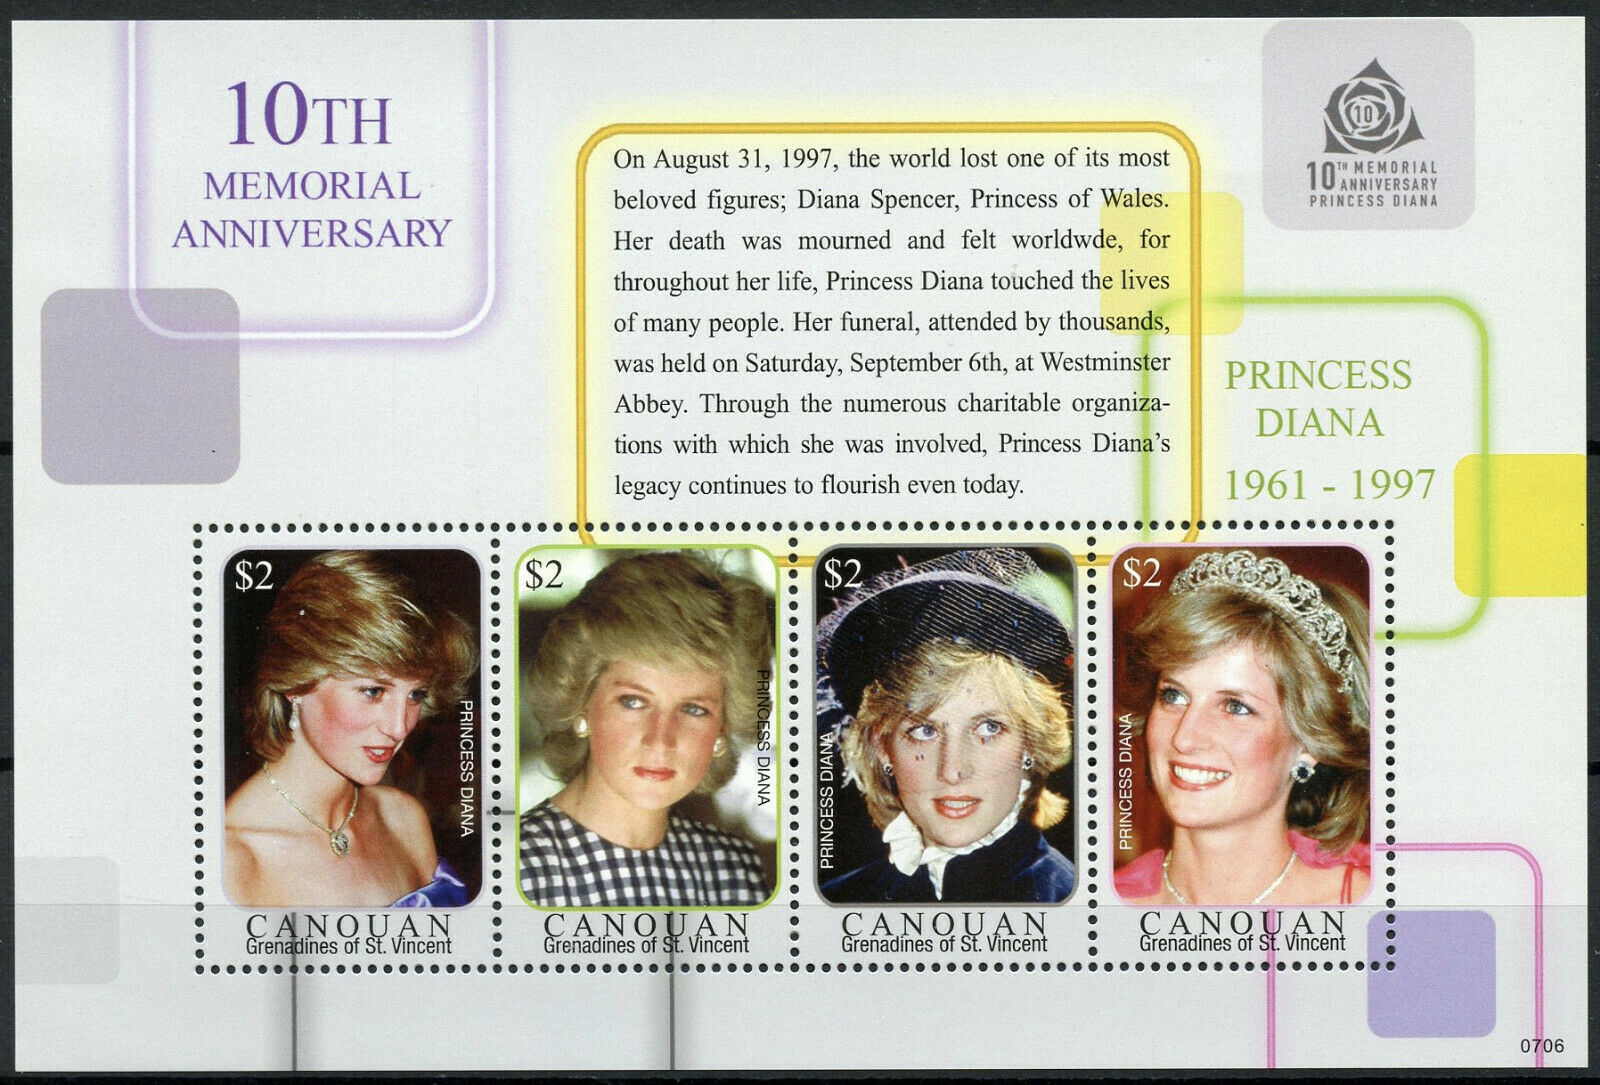 Canouan Gren St Vincent 2007 MNH Royalty Stamps Princess Diana Memorial 4v M/S